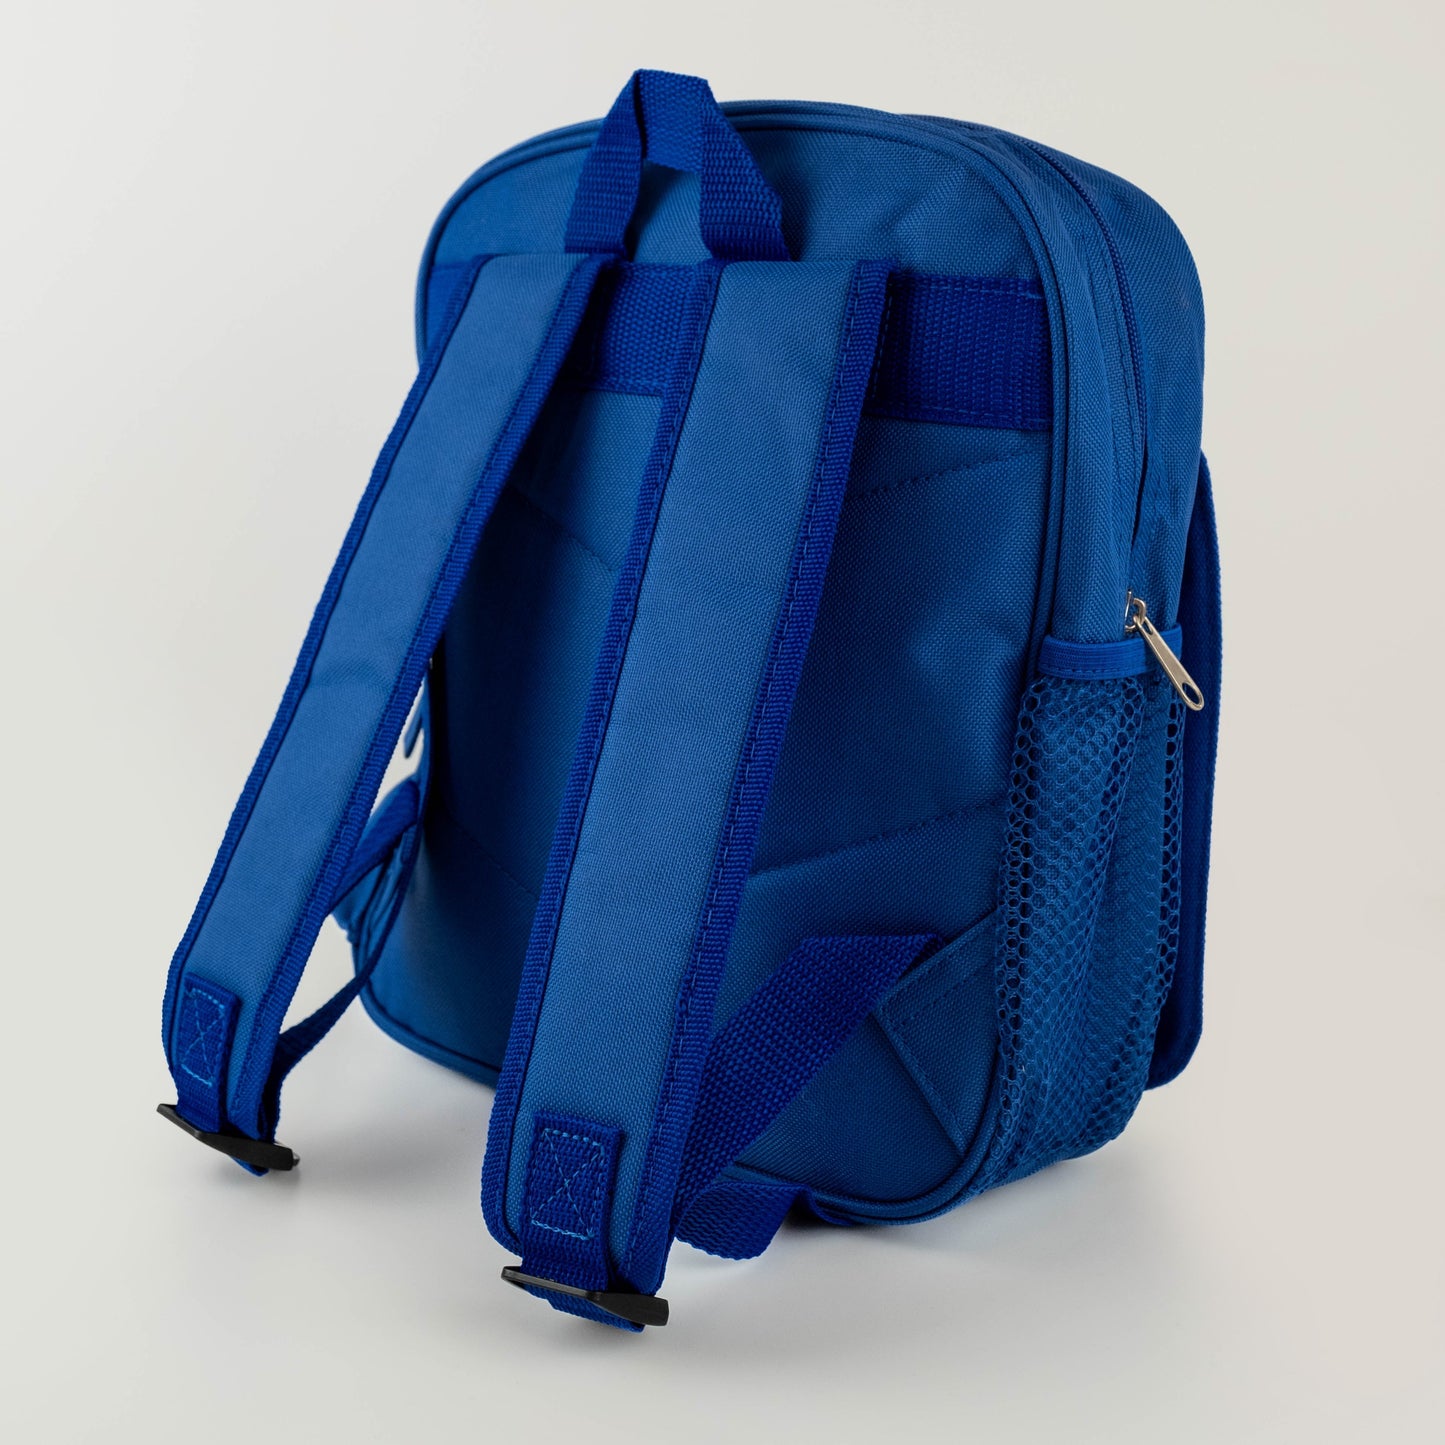 Children’s Personalised Backpack - Teddy Bear Design